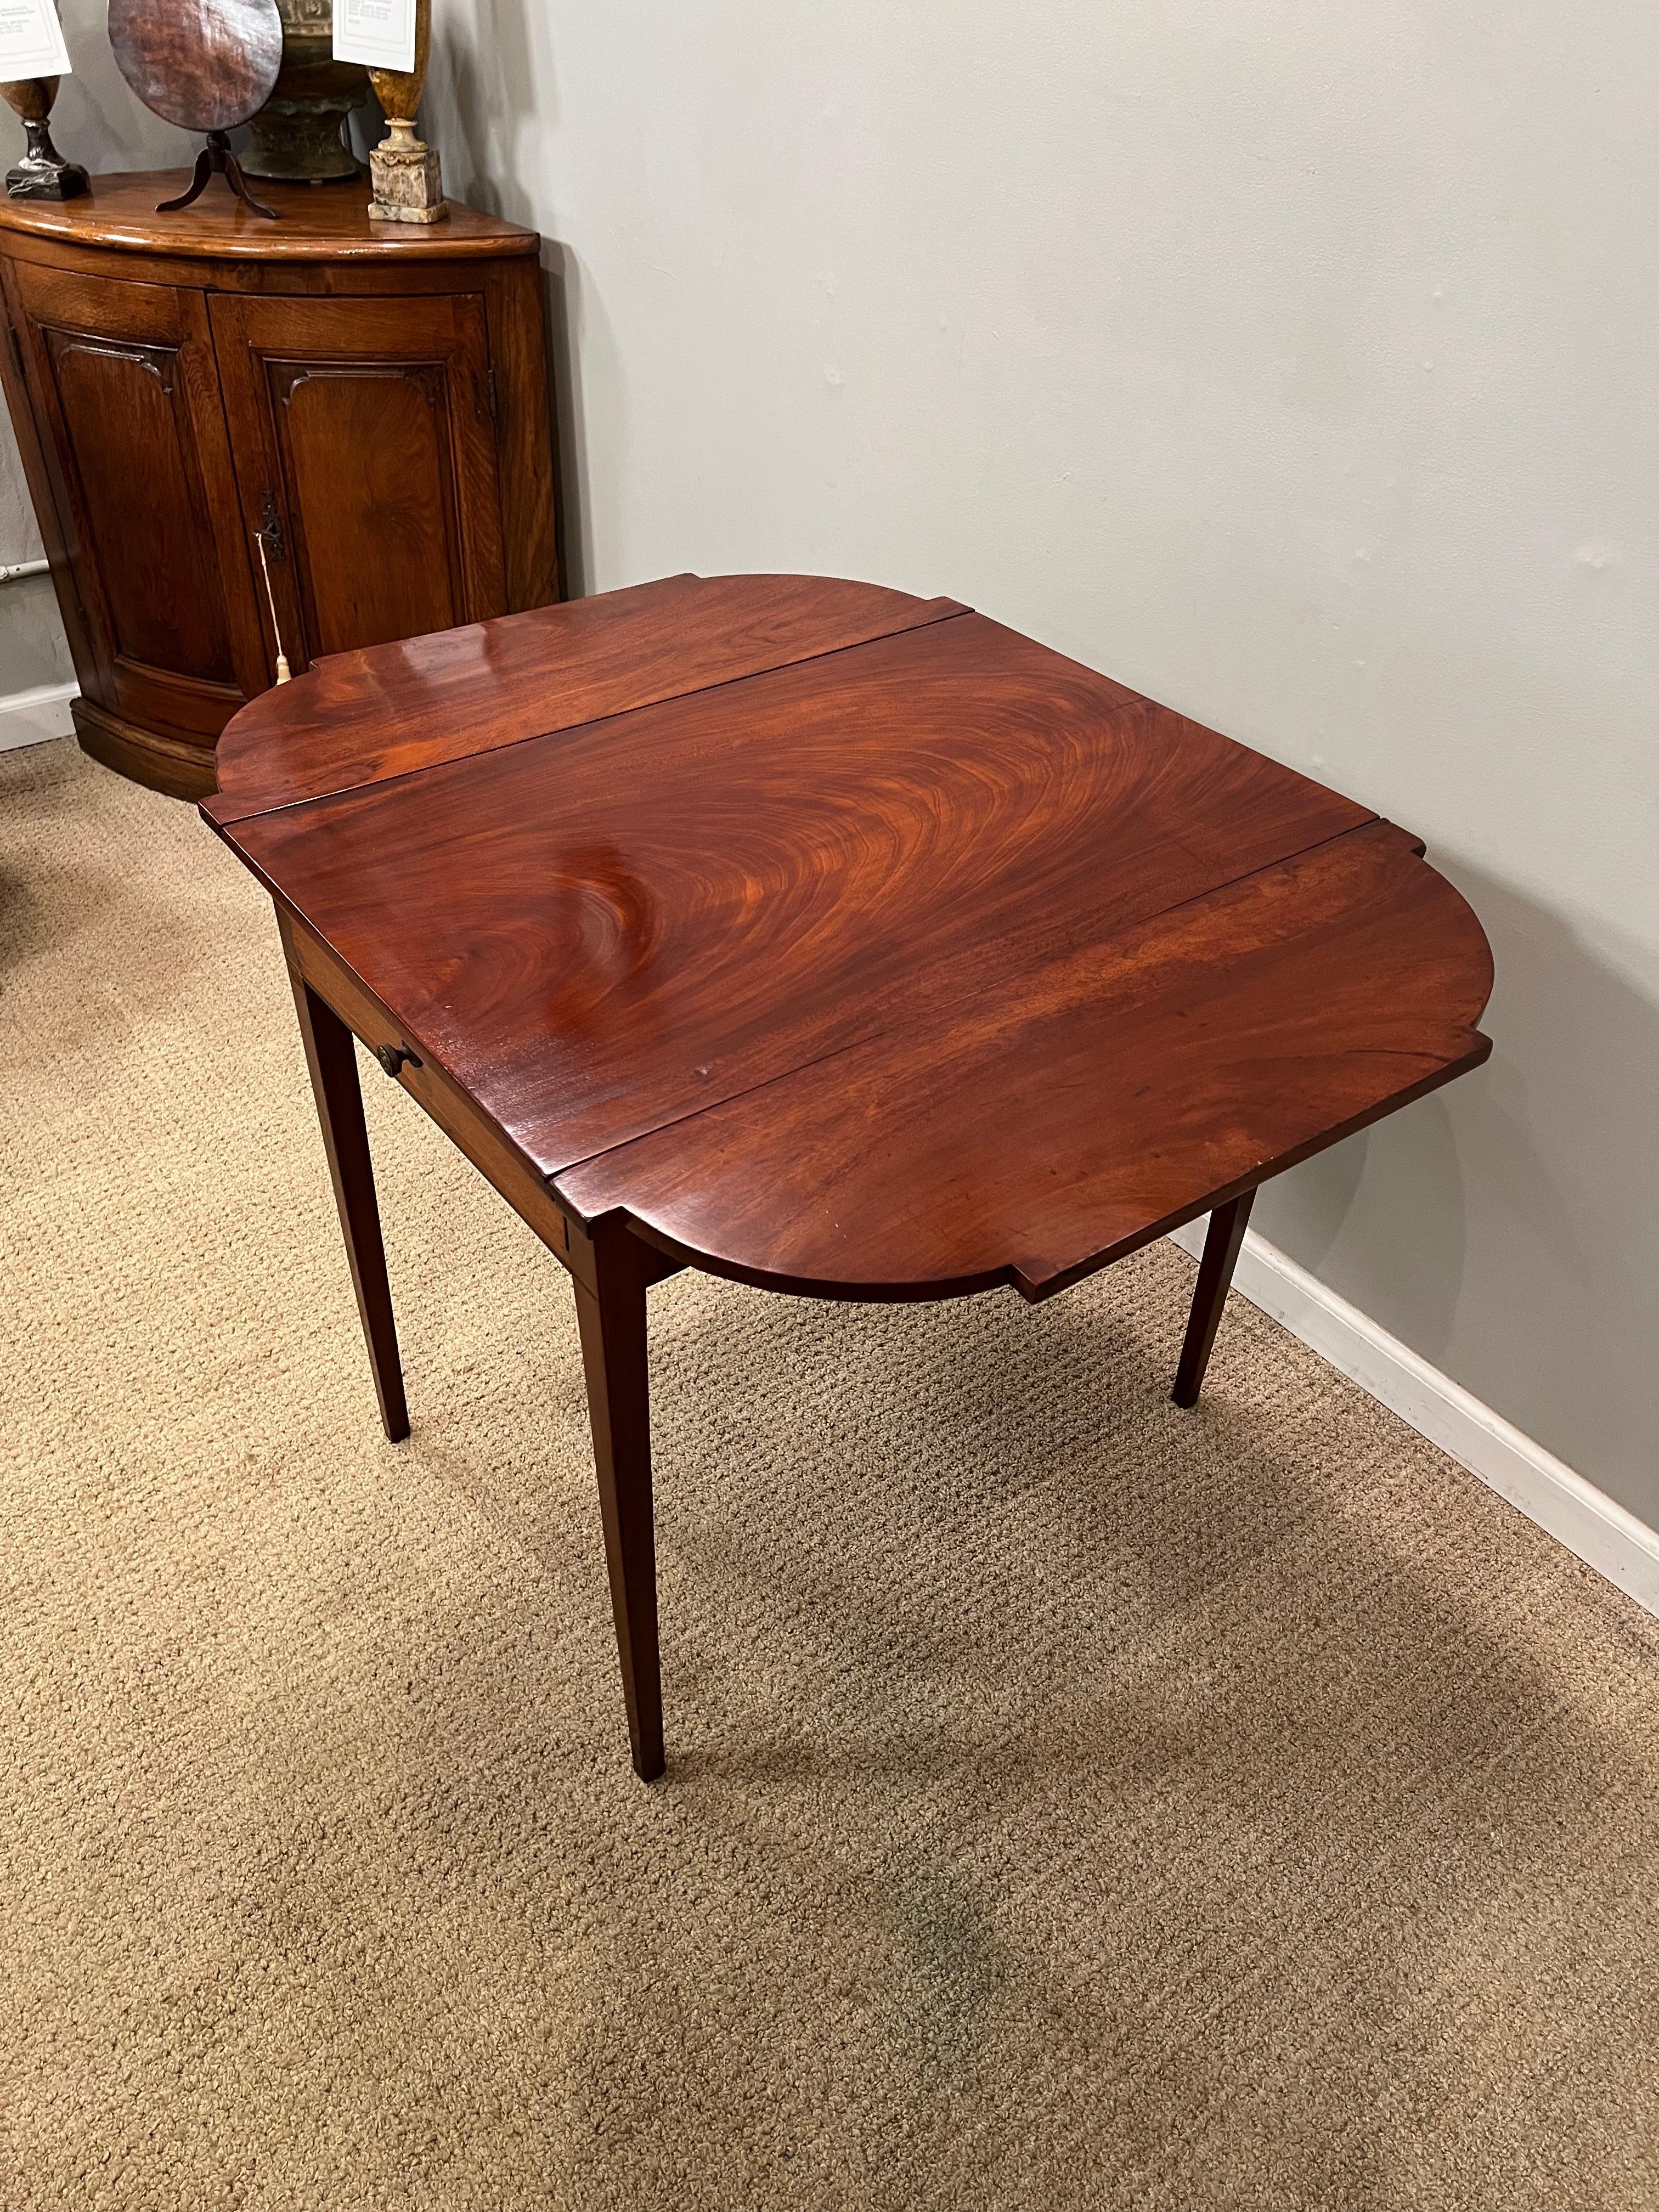 Polished American Pembroke table 